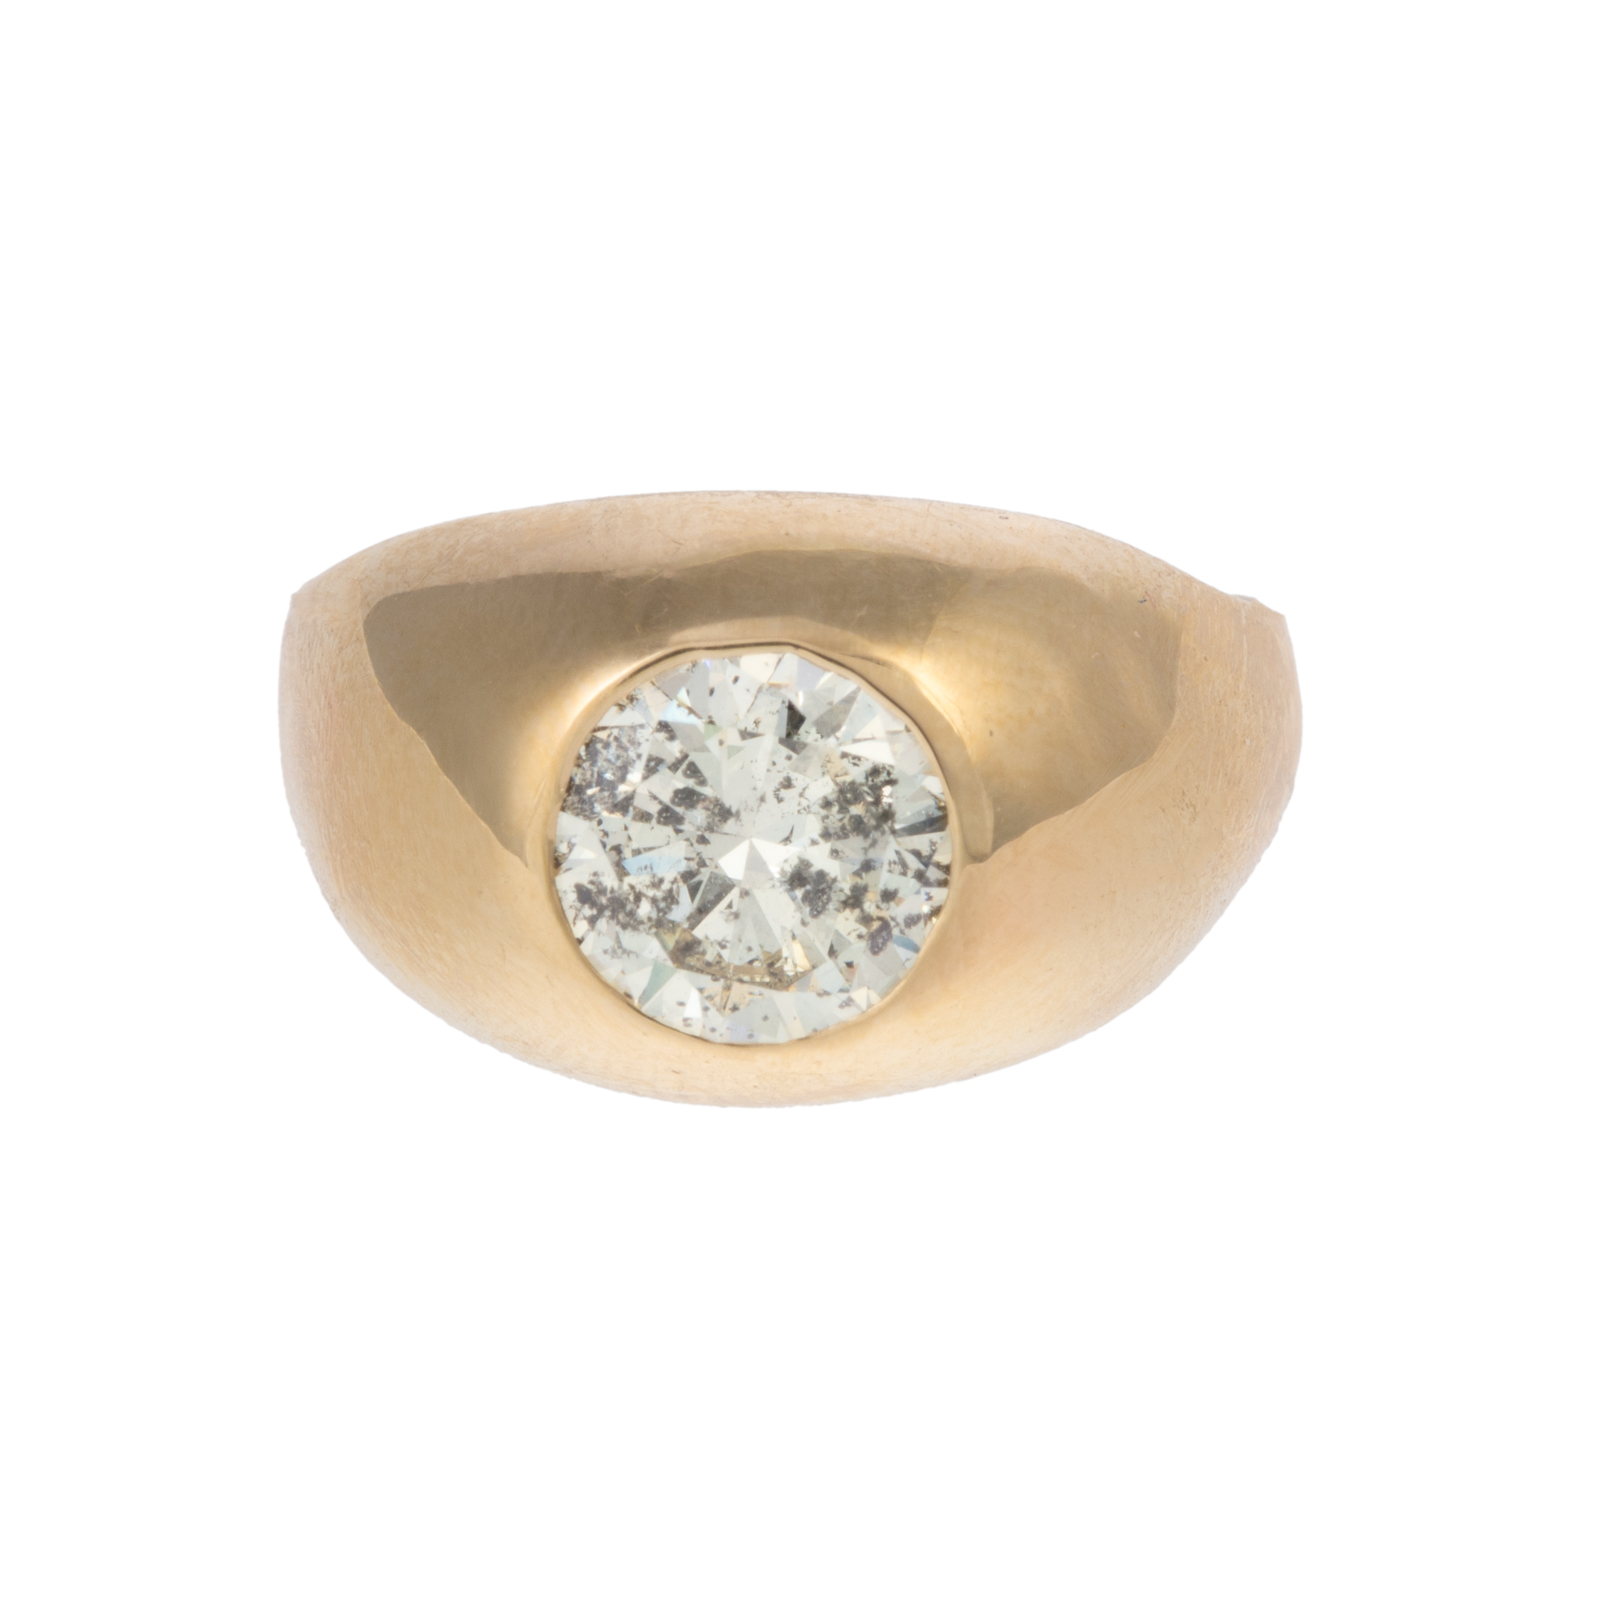 A 1.50 CT GYPSY-SET DIAMOND RING